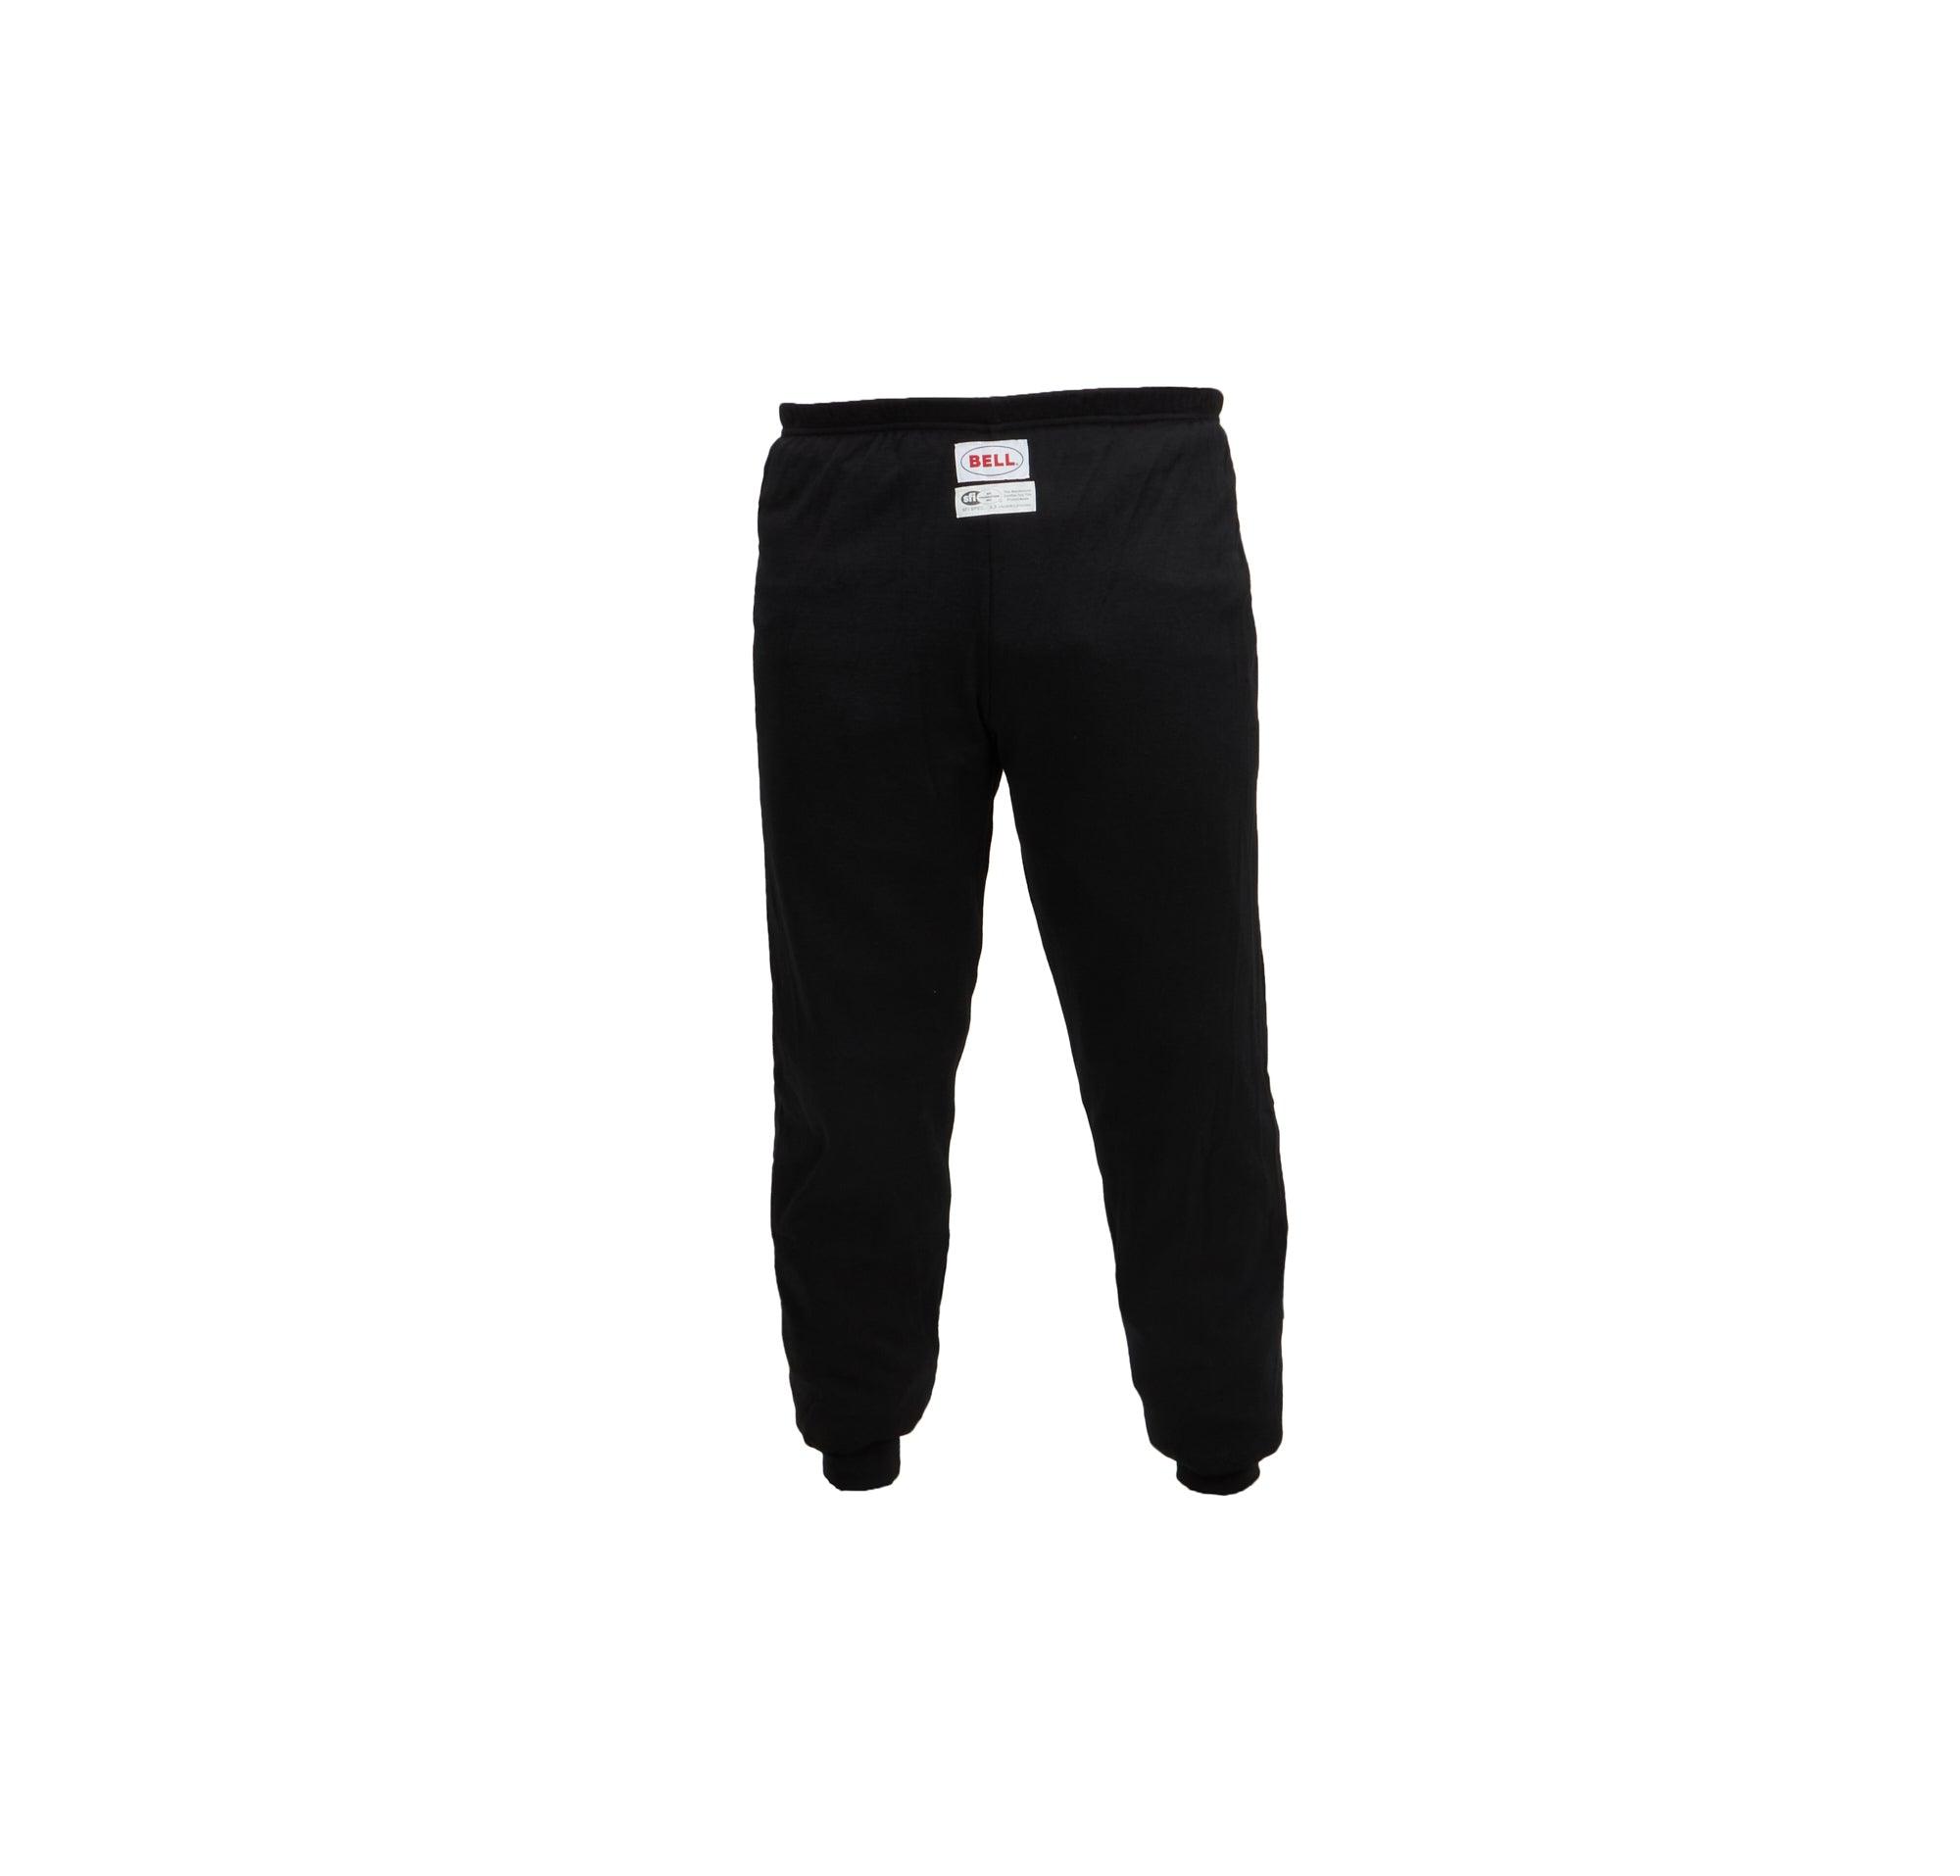 Underwear Bottom SPORT- TX Black Lrg SFI 3.3/5 - Burlile Performance Products